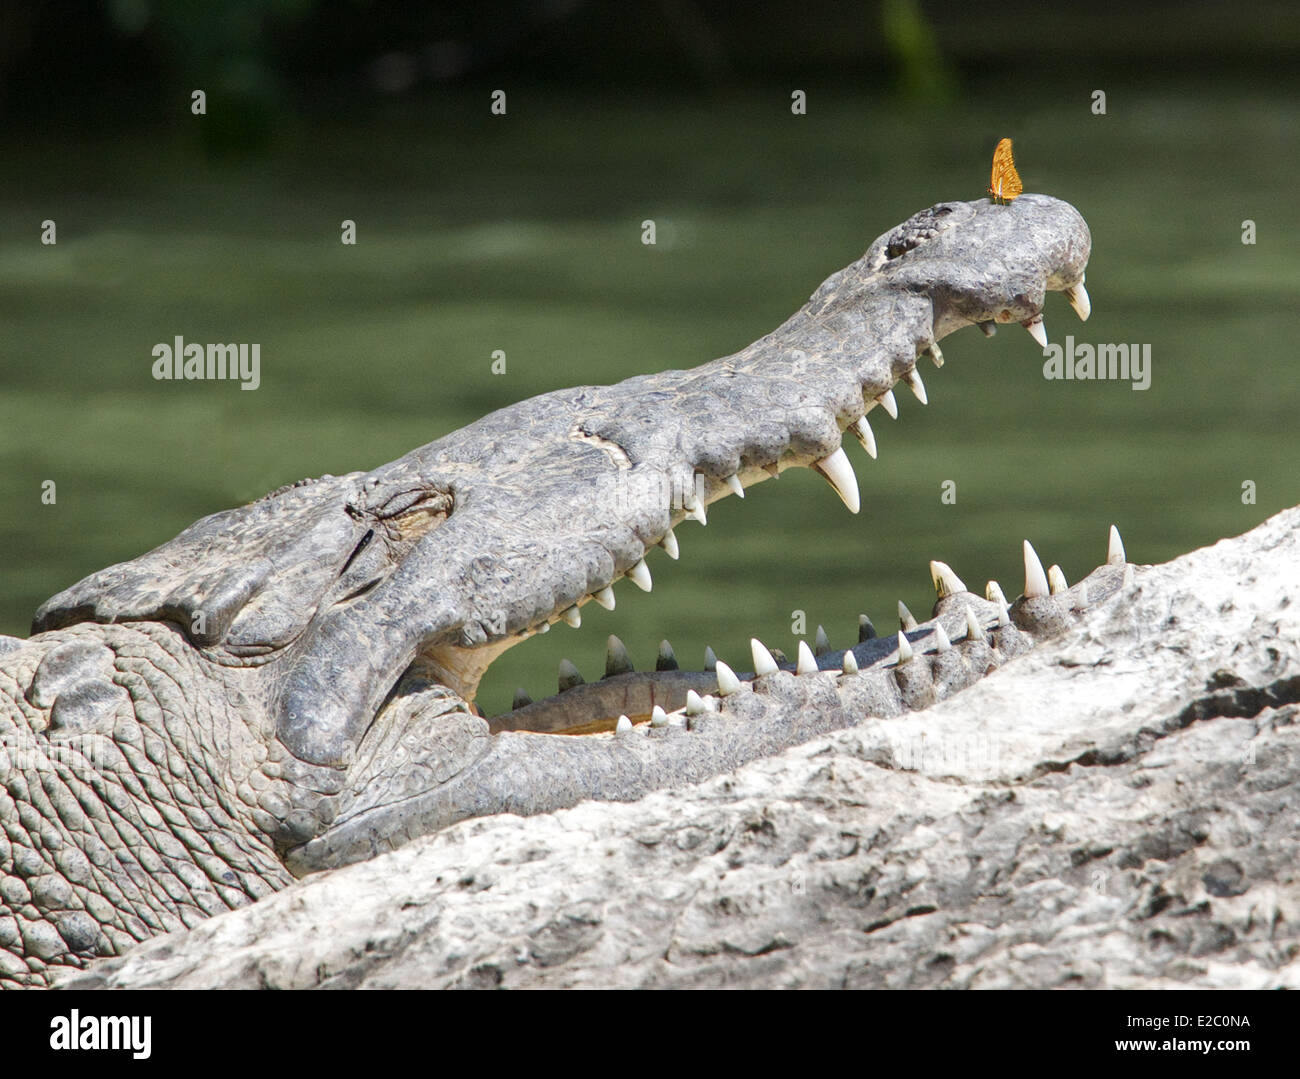 Krokodil mit mutigen Schmetterling auf Schnauze Sumidero Canyon Chiapas-Mexiko Stockfoto